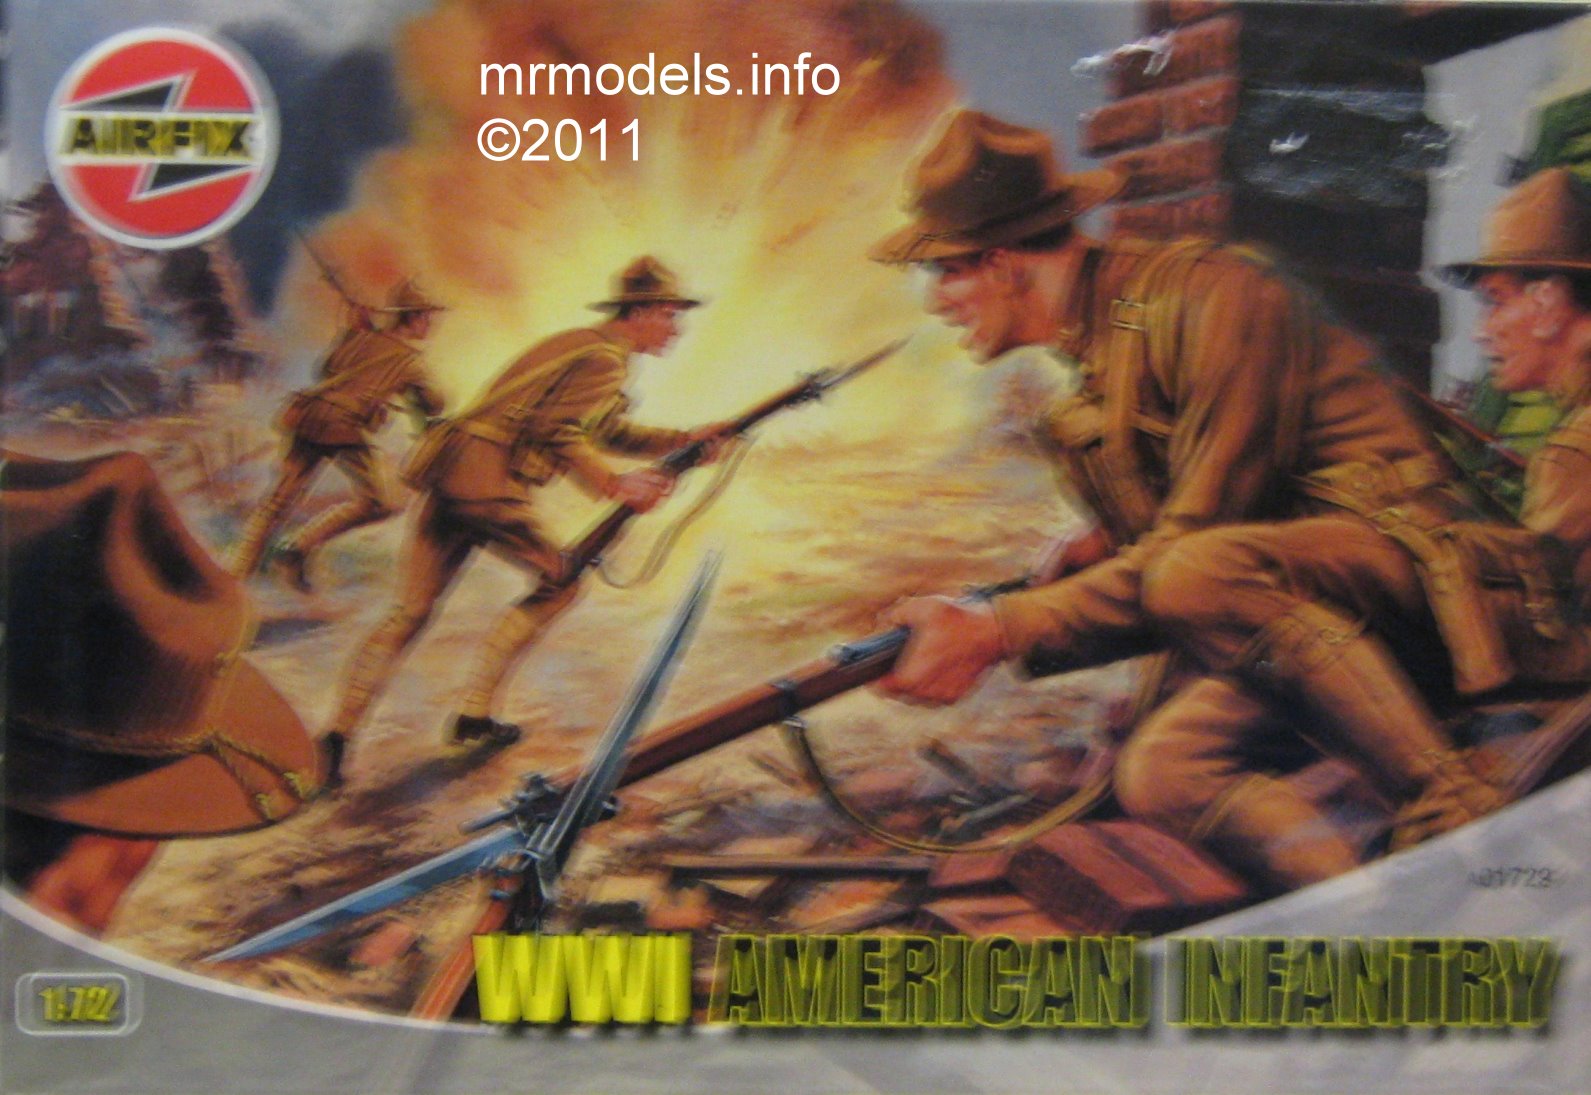 WWI US Infantry